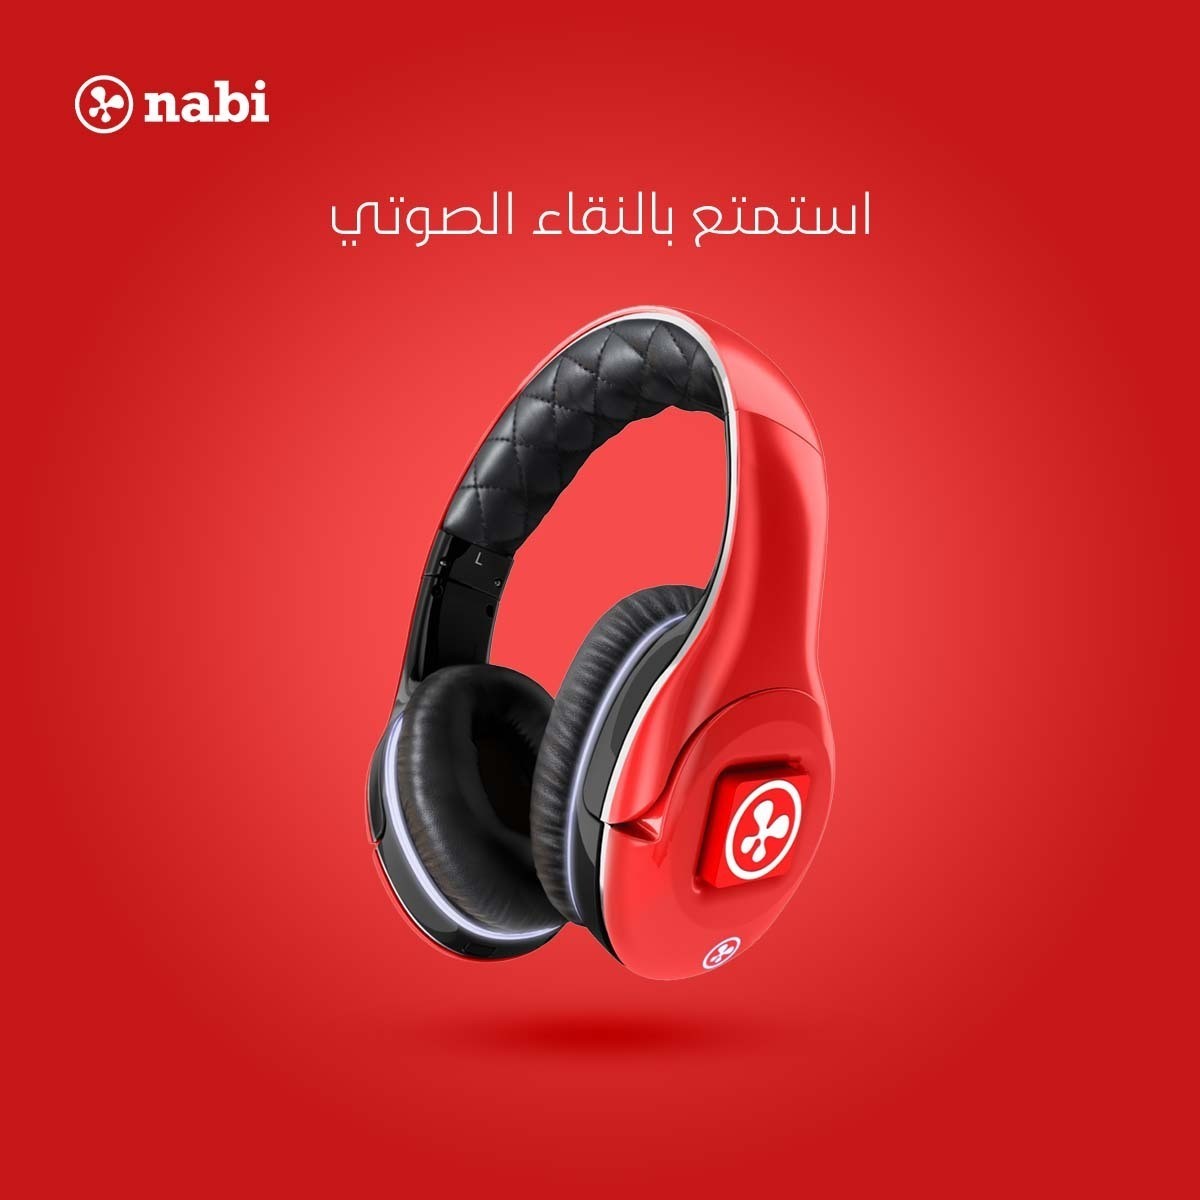 Nabi_Headphones